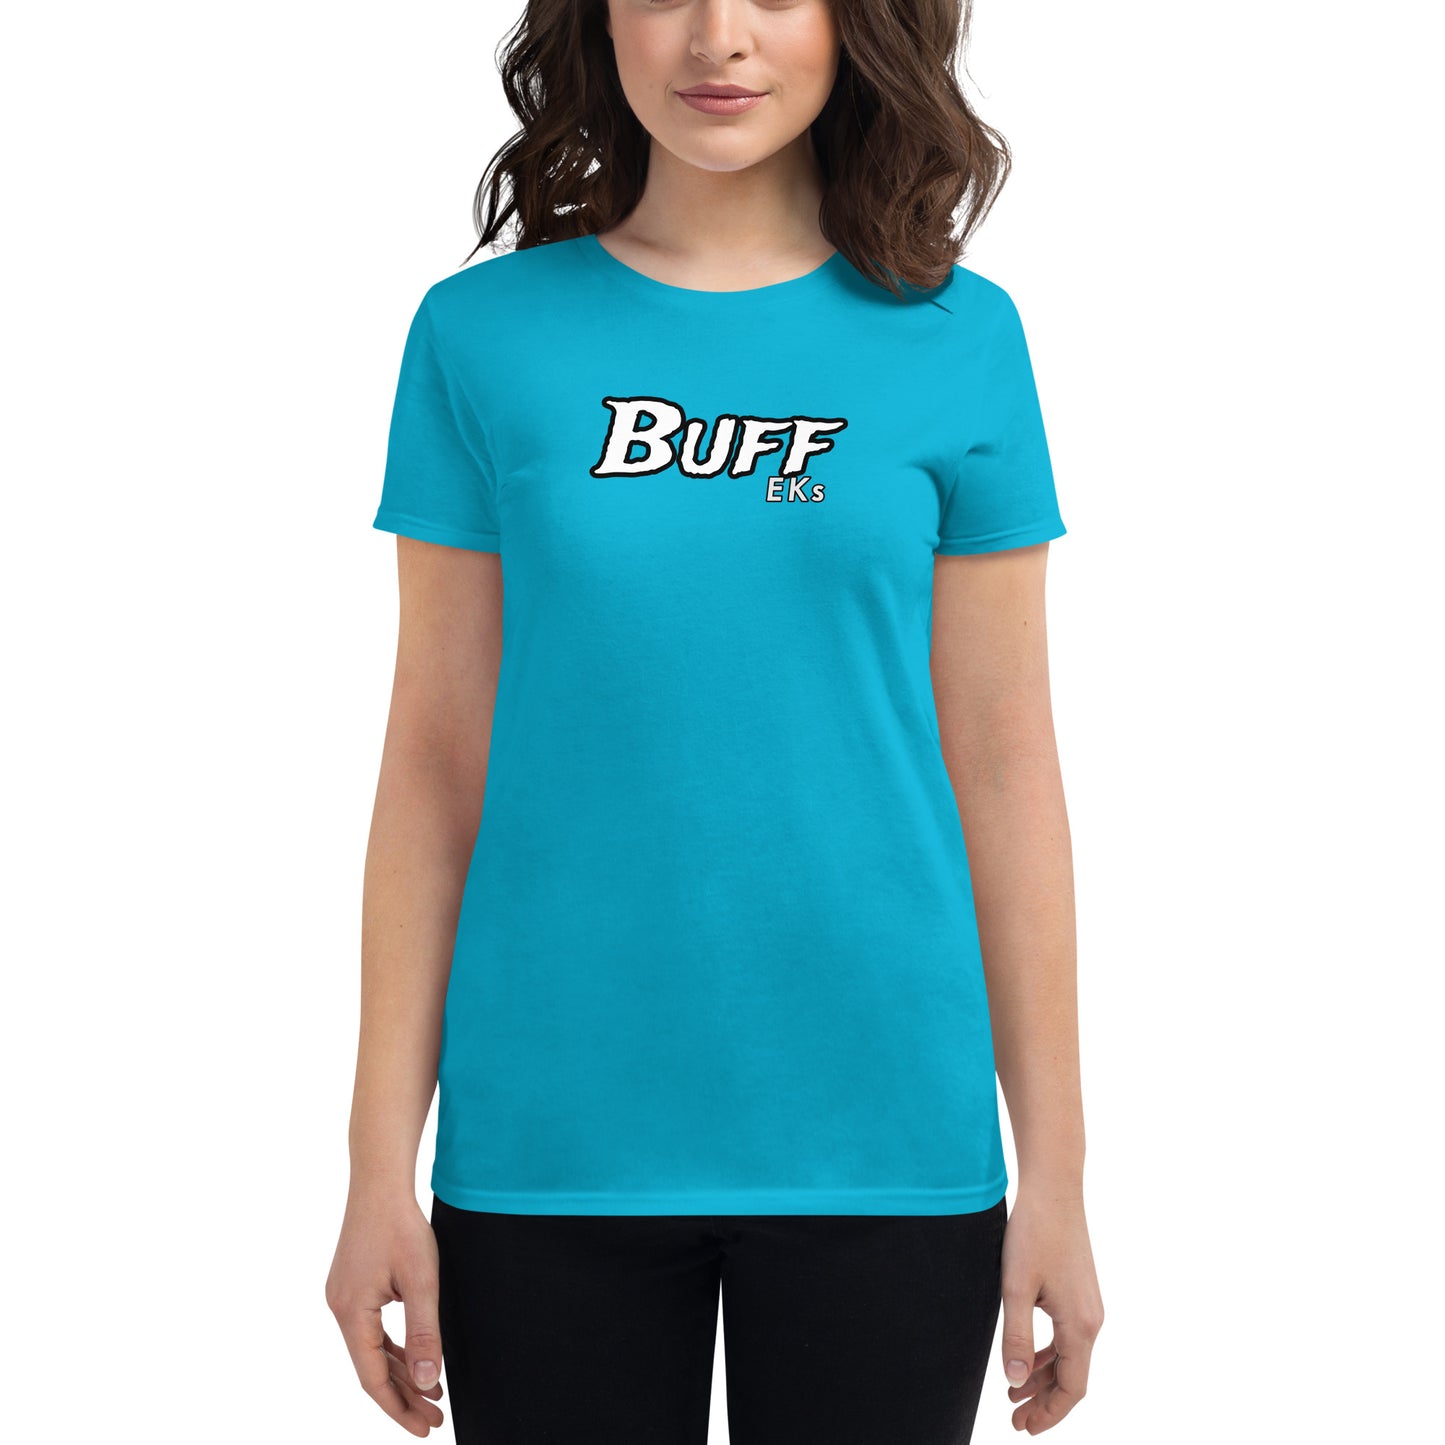 Buff EKs Women's Fashion Fit T-Shirt